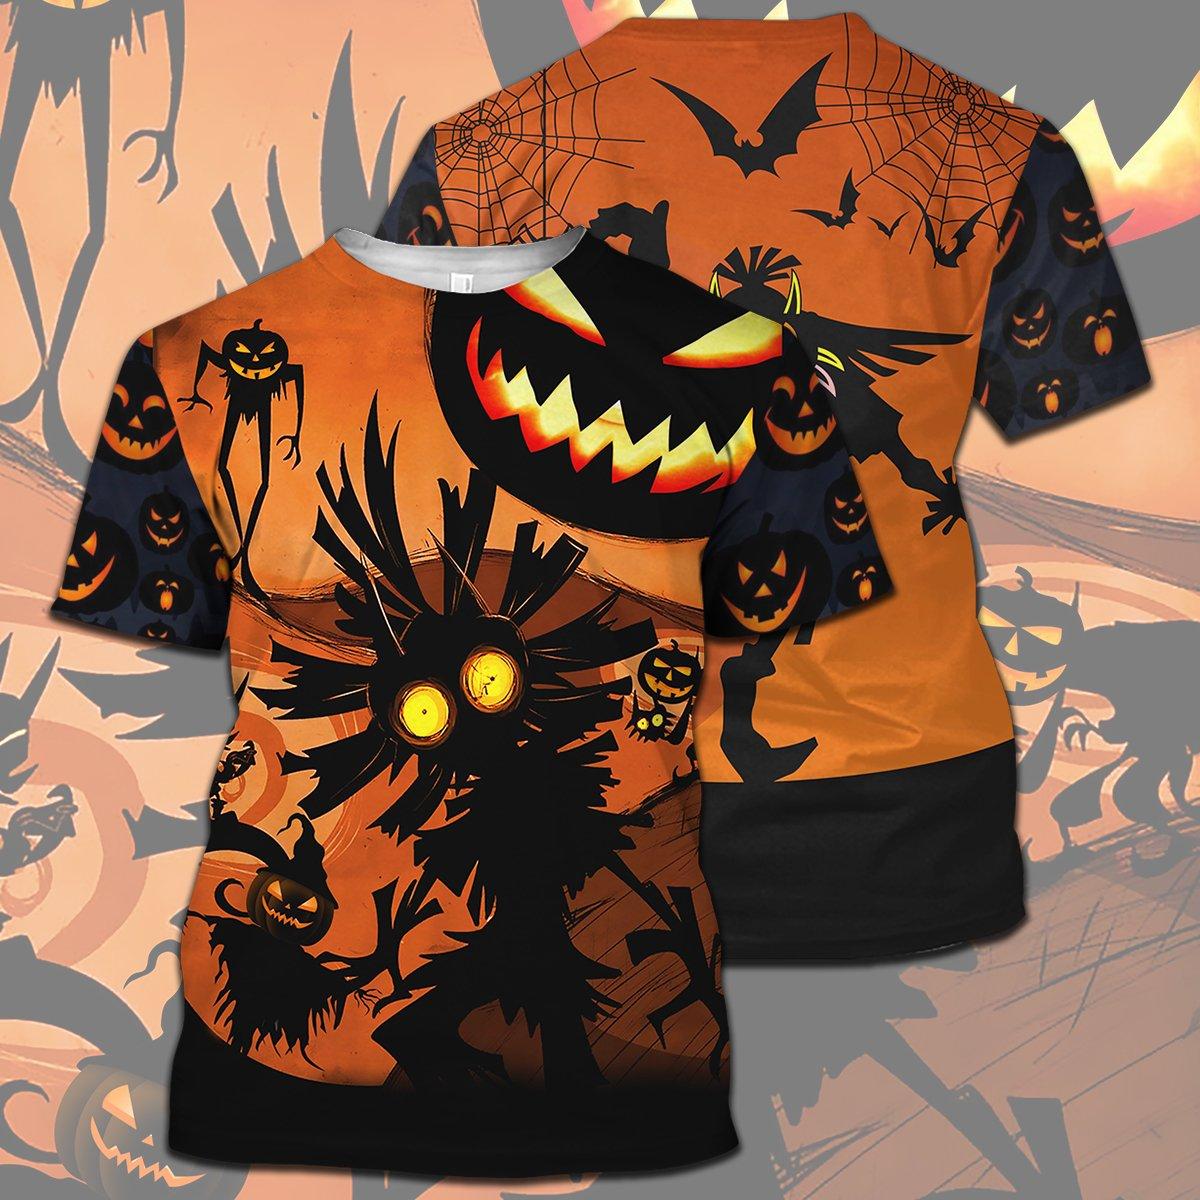 Jack-o'-lantern halloween 3d t-shirt